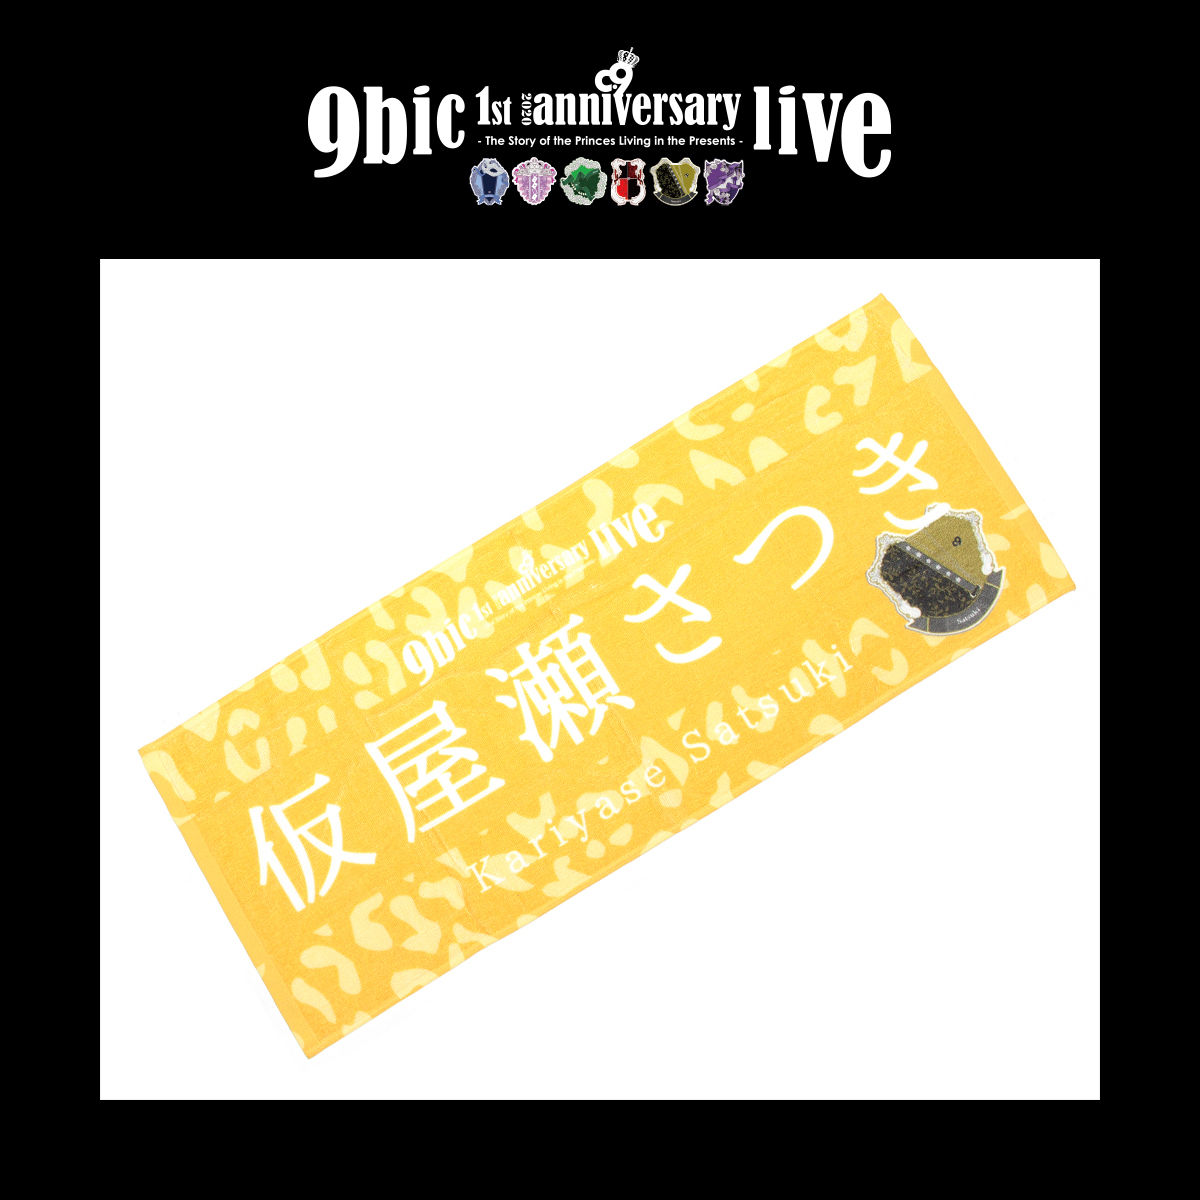 【9bic 1’st Anniversary Live 〜現在を生きる王子様達の物語〜】フェイスタオル（yellow）